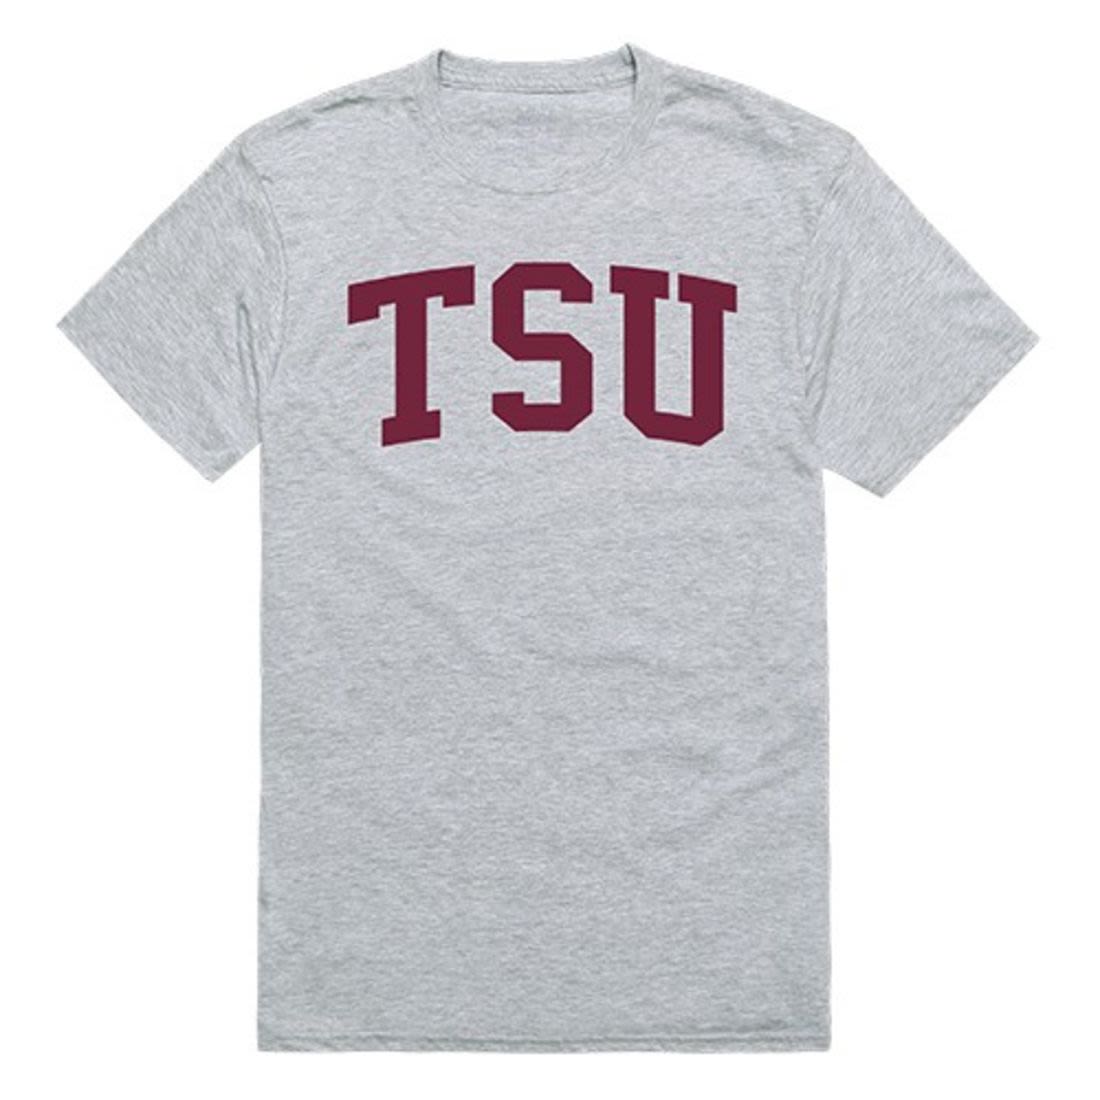 TSU Texas Southern University Mens Game Day Tee T-Shirt Heather Grey-Campus-Wardrobe